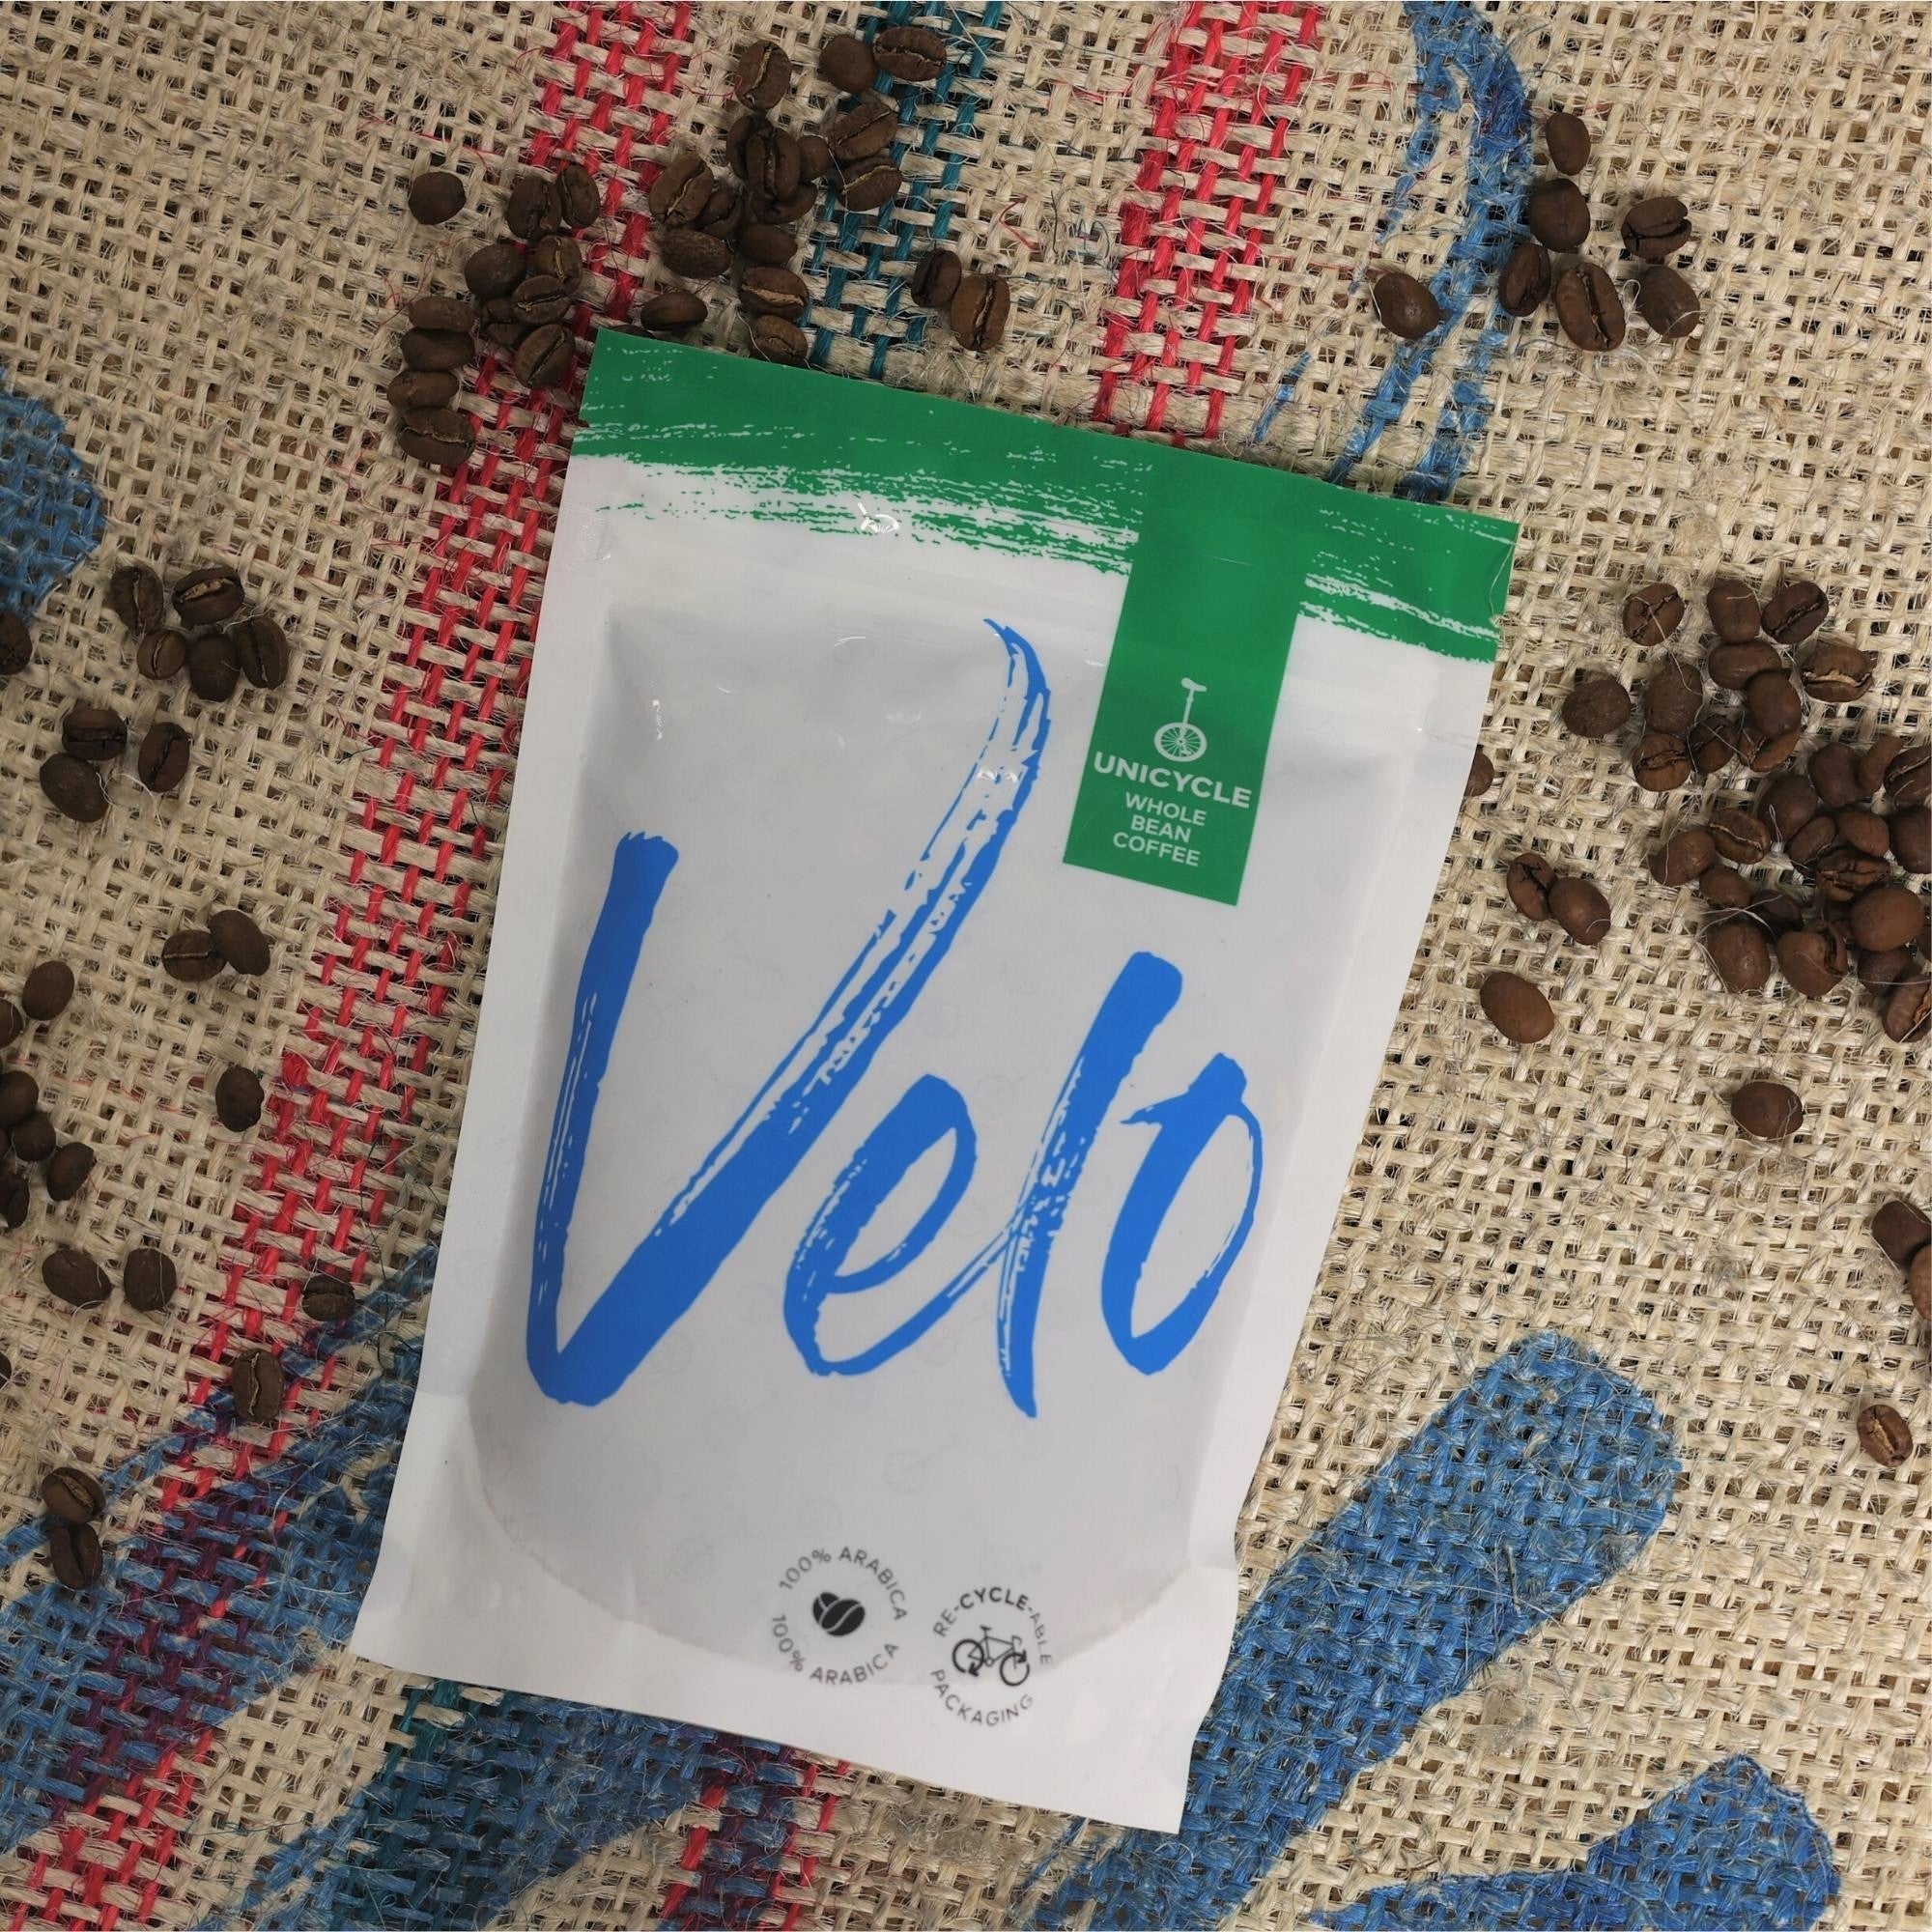 Buena Vista 200g Coffee Bag Nicaragua - Velo Coffee Roasters